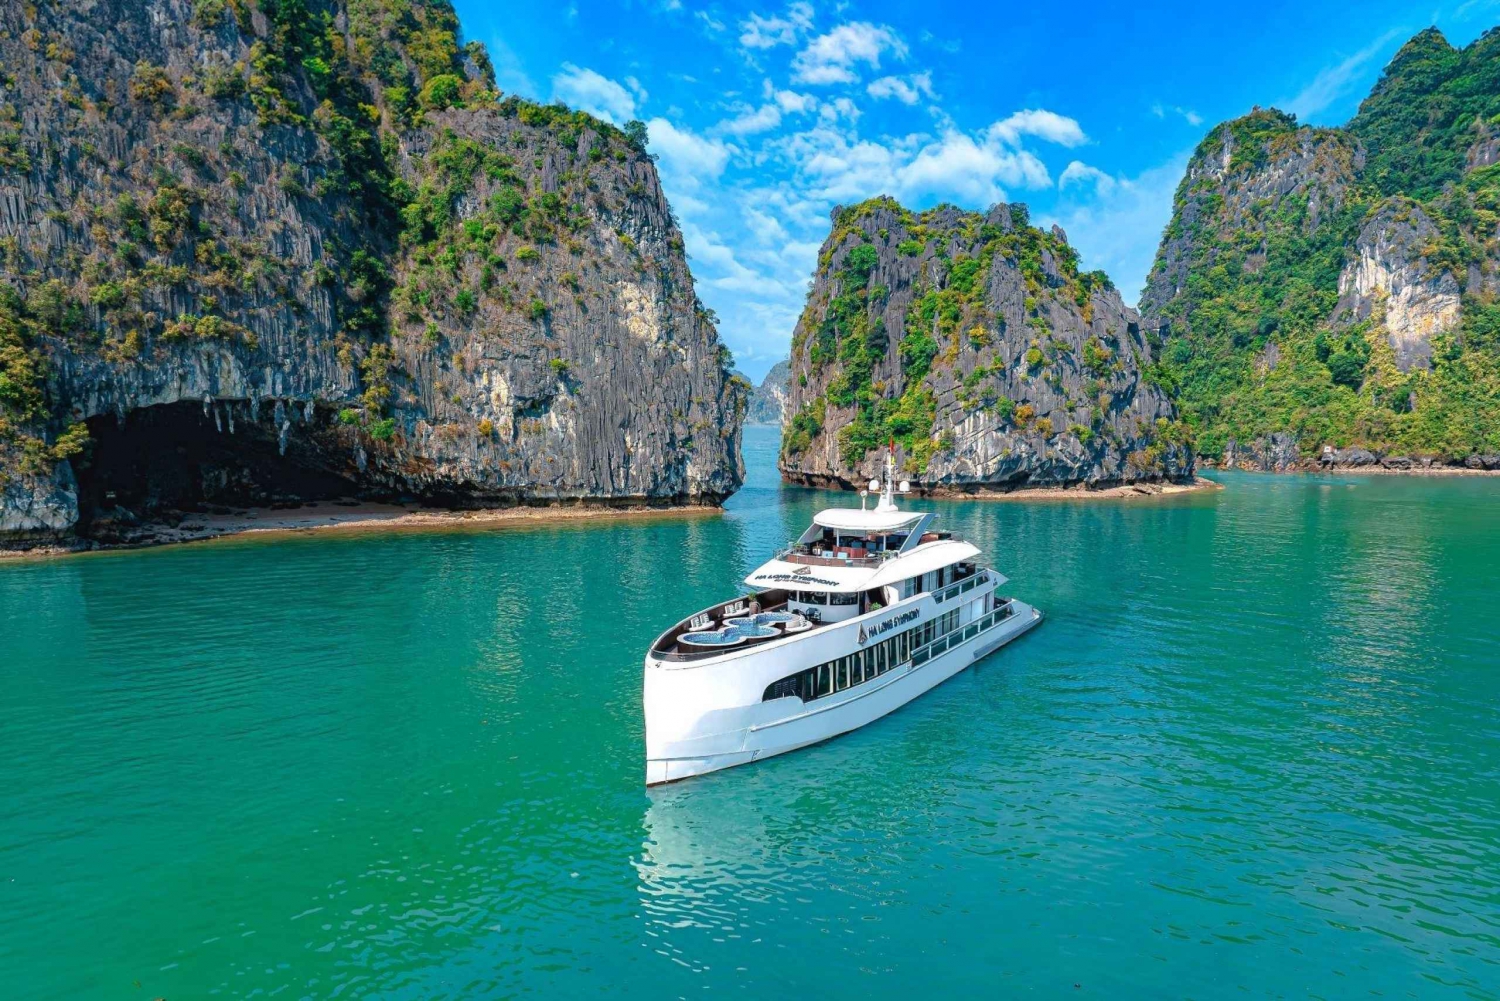 Symphony Cruise med Sung Sot-grotten, Ti Top-øya og lunsj